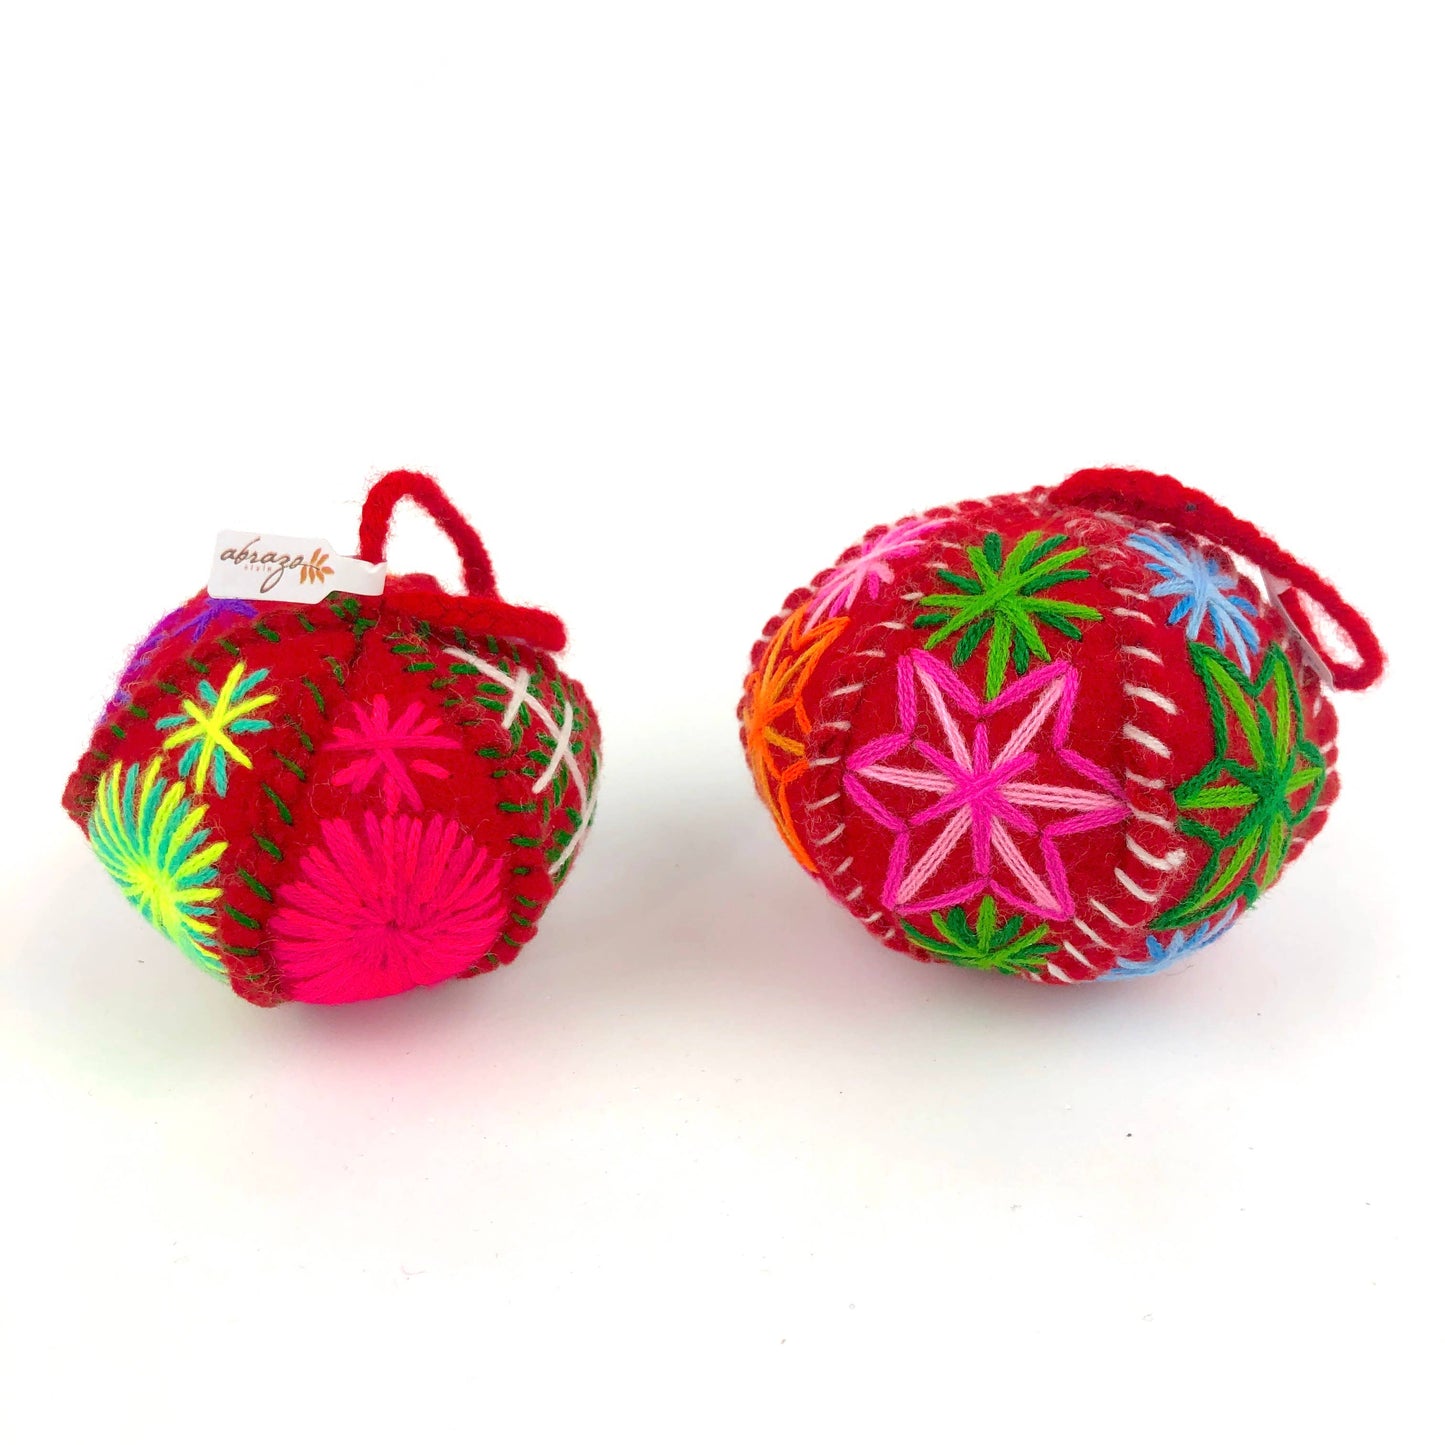 Embroidered Globe Ornaments